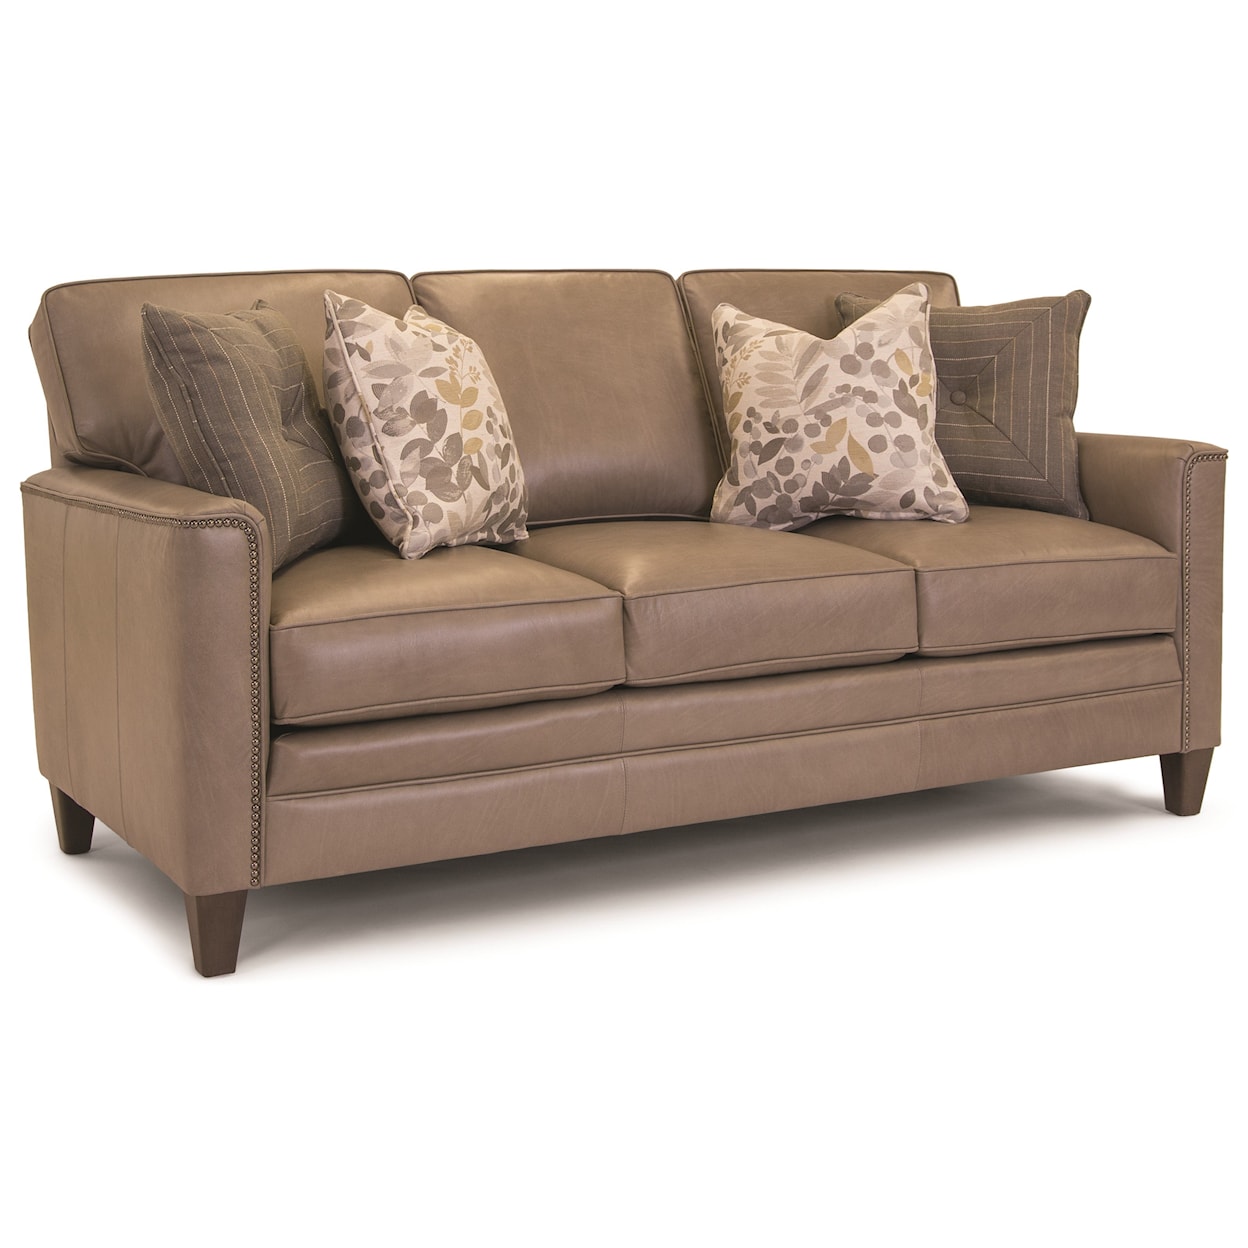 Kirkwood Build Your Own 3000 Series Customizable Sofa